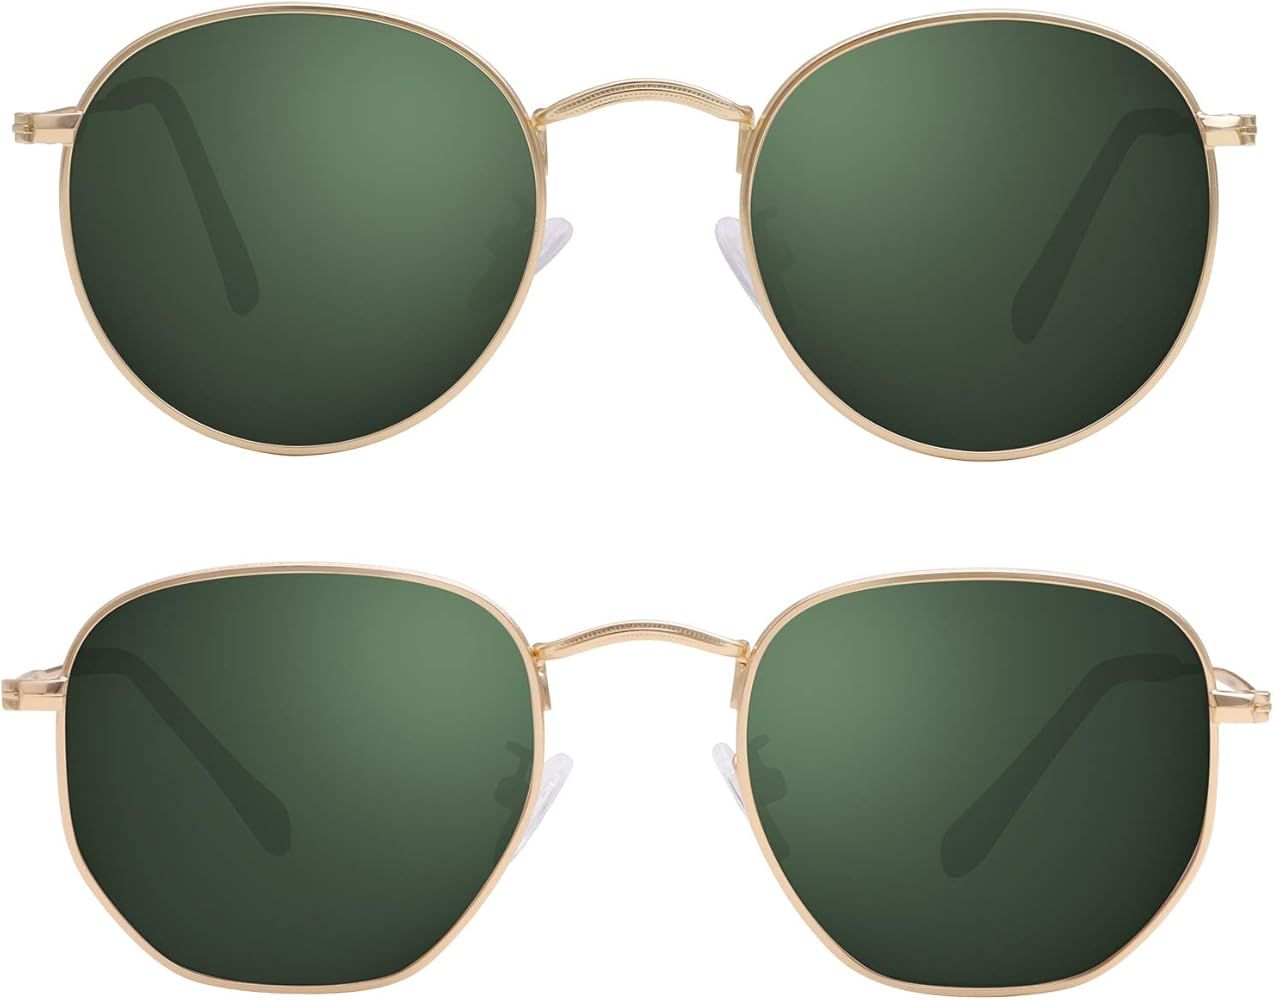 GRFISIA Small Round Polarized Sunglasses Women and Men Vintage Hexagon Square Sun glasses UV400 ... | Amazon (US)